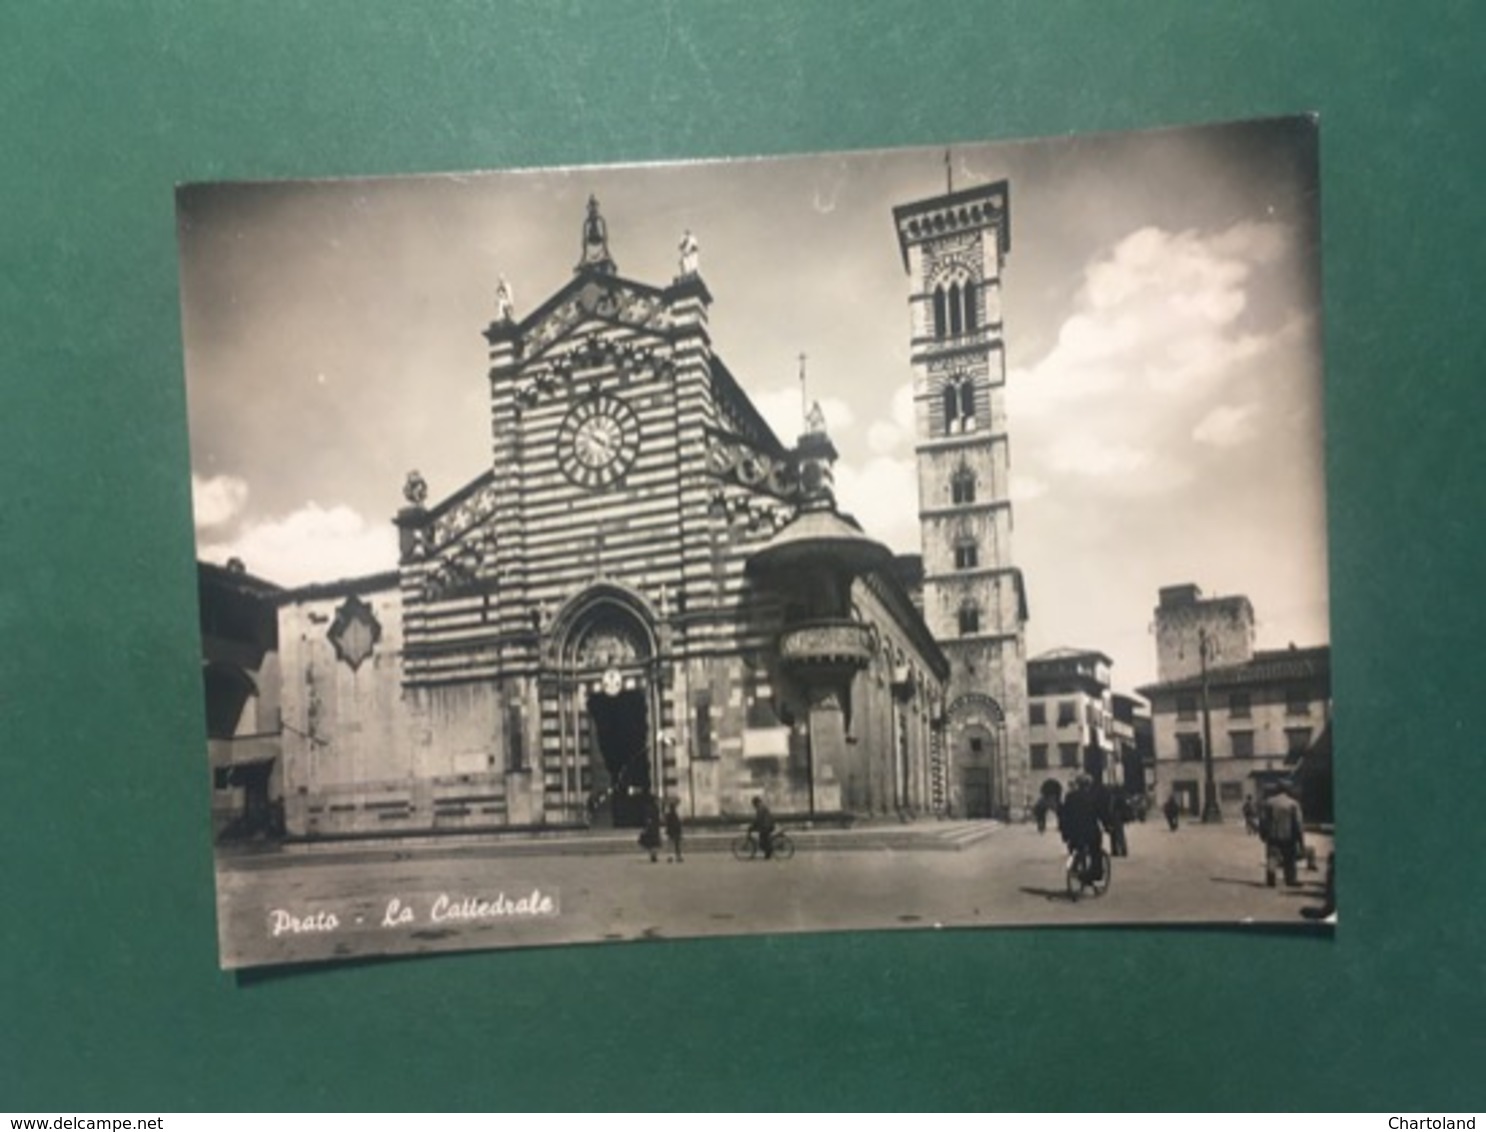 Cartolina Prato - La Cattedrale - 1960 - Firenze (Florence)